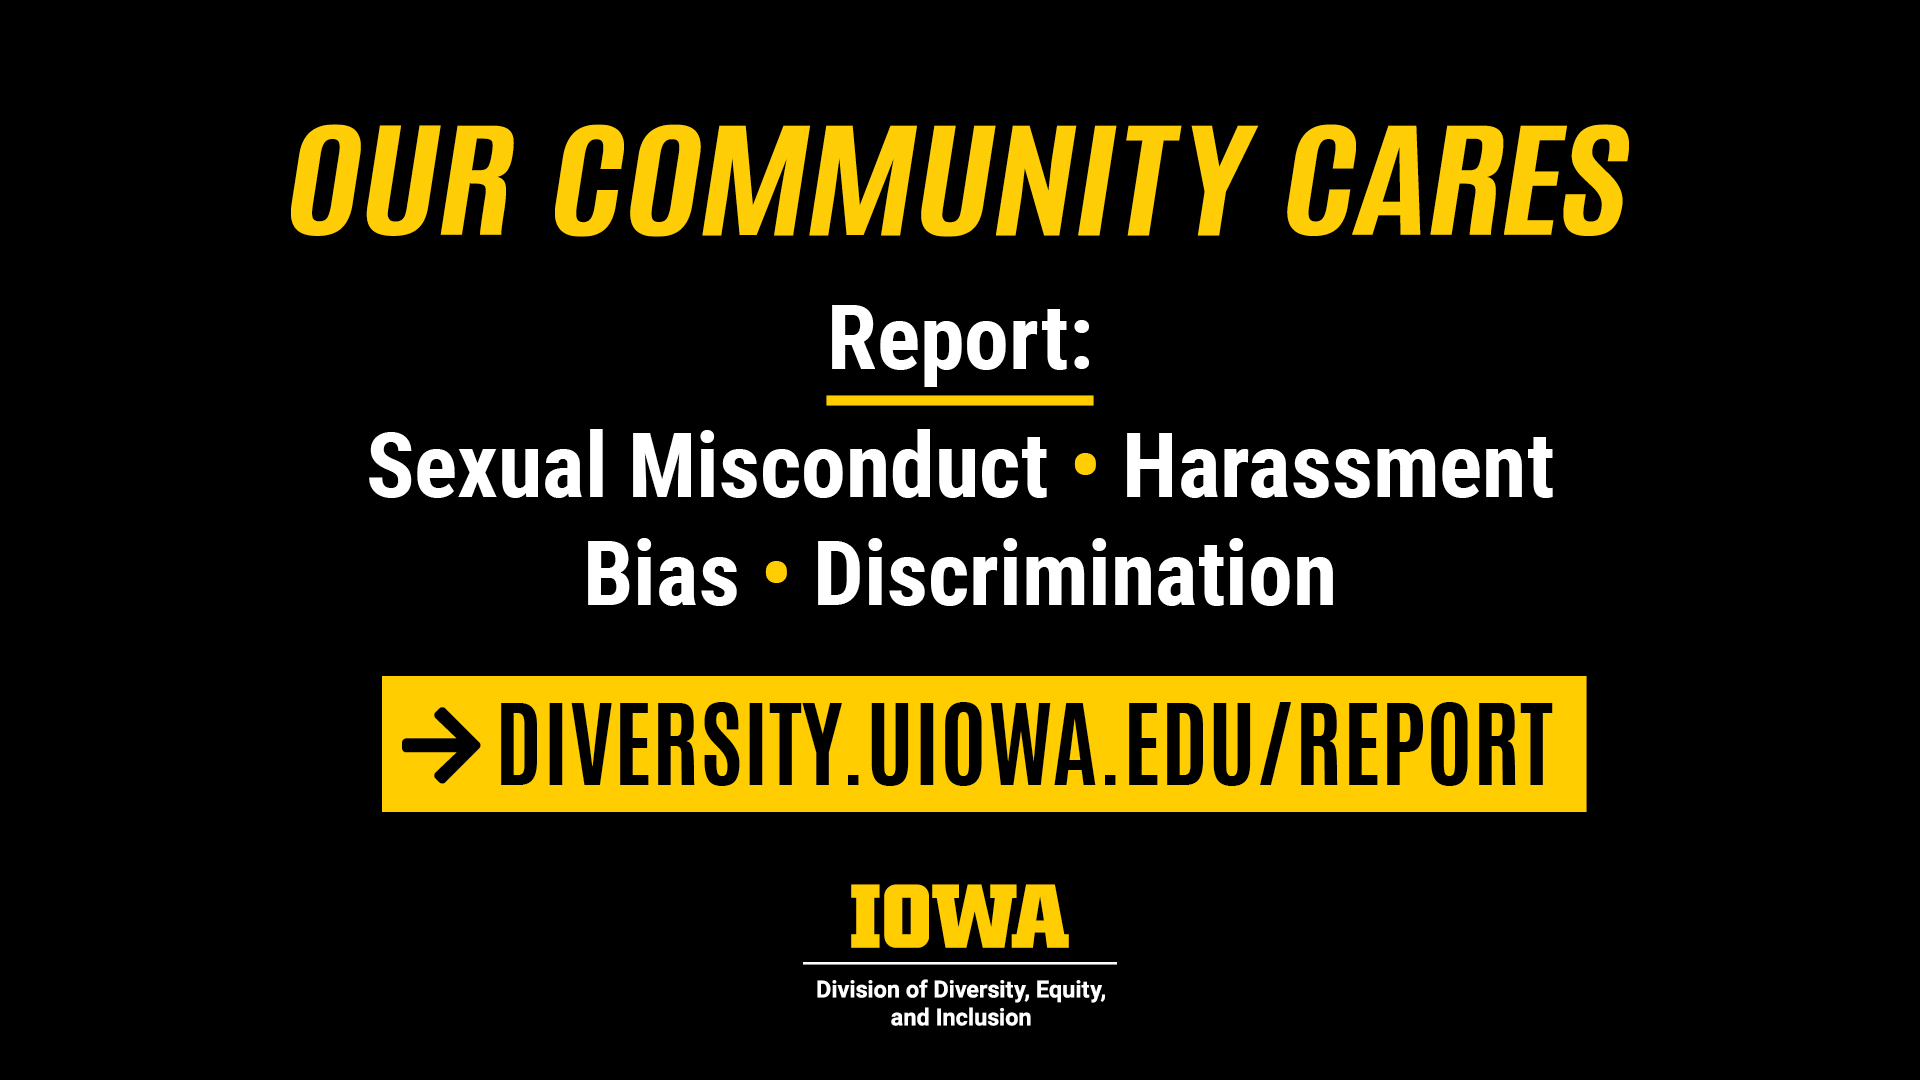 Our Community Cares - Report Sexual Misconduct, Harassment, Bias, Discrimination @diversity.uiowa.edu/report